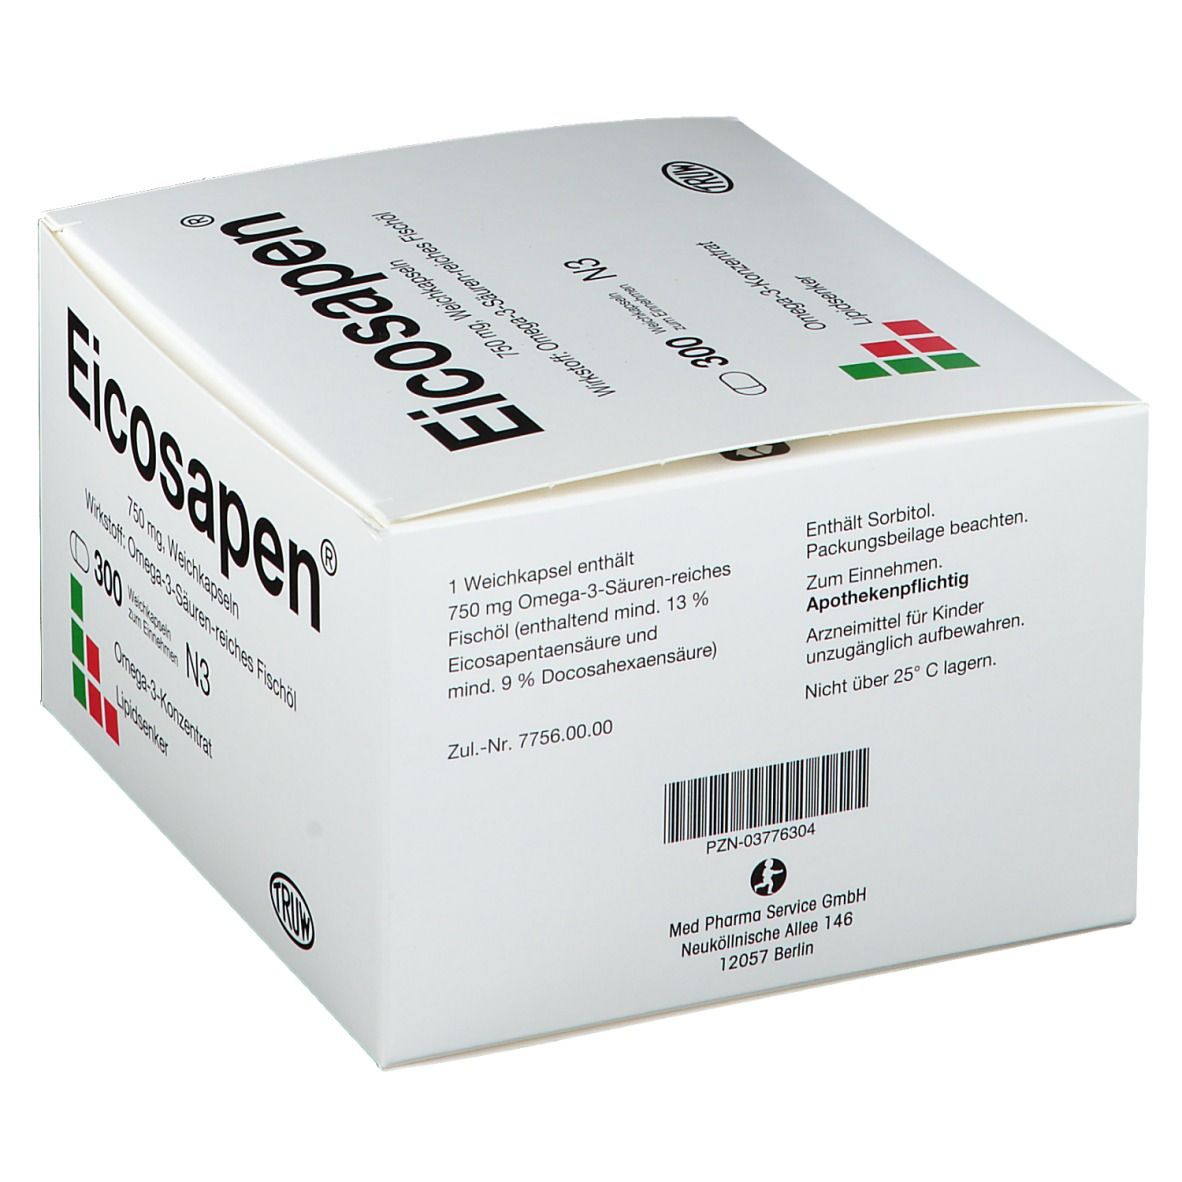 Eicosapen®